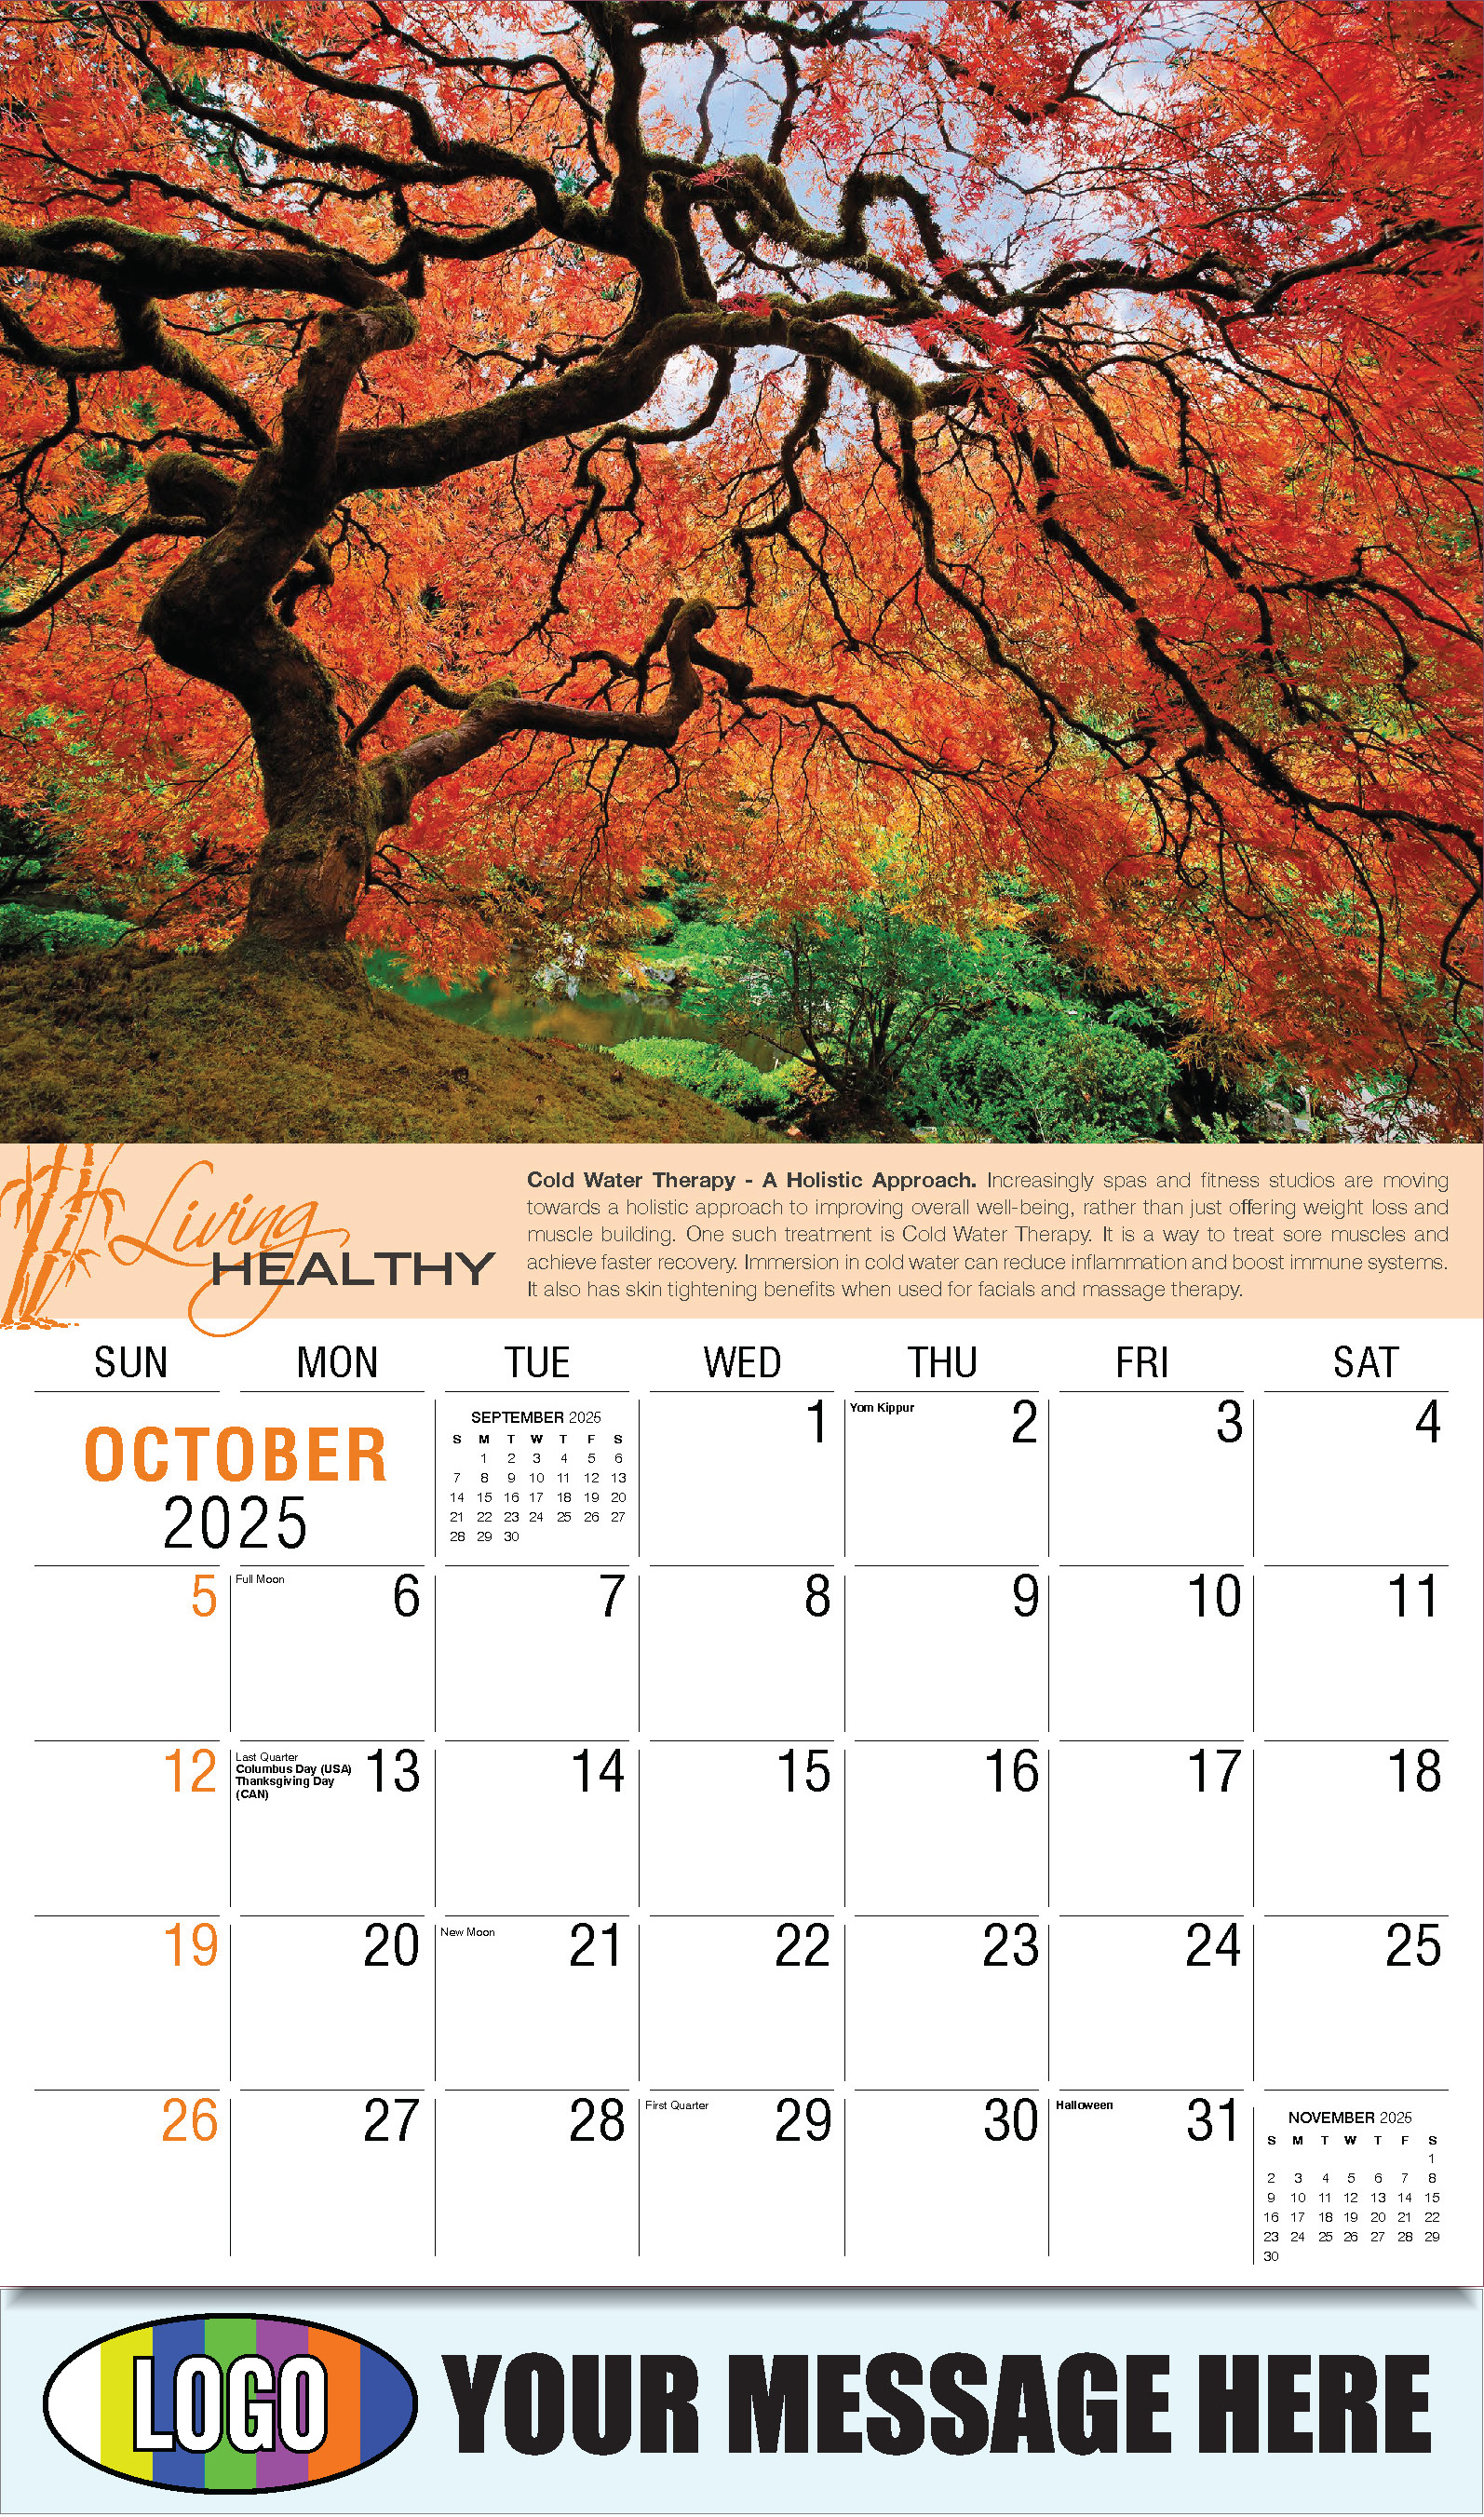 Living Healthy 2025 Business Promotional Calendar - October